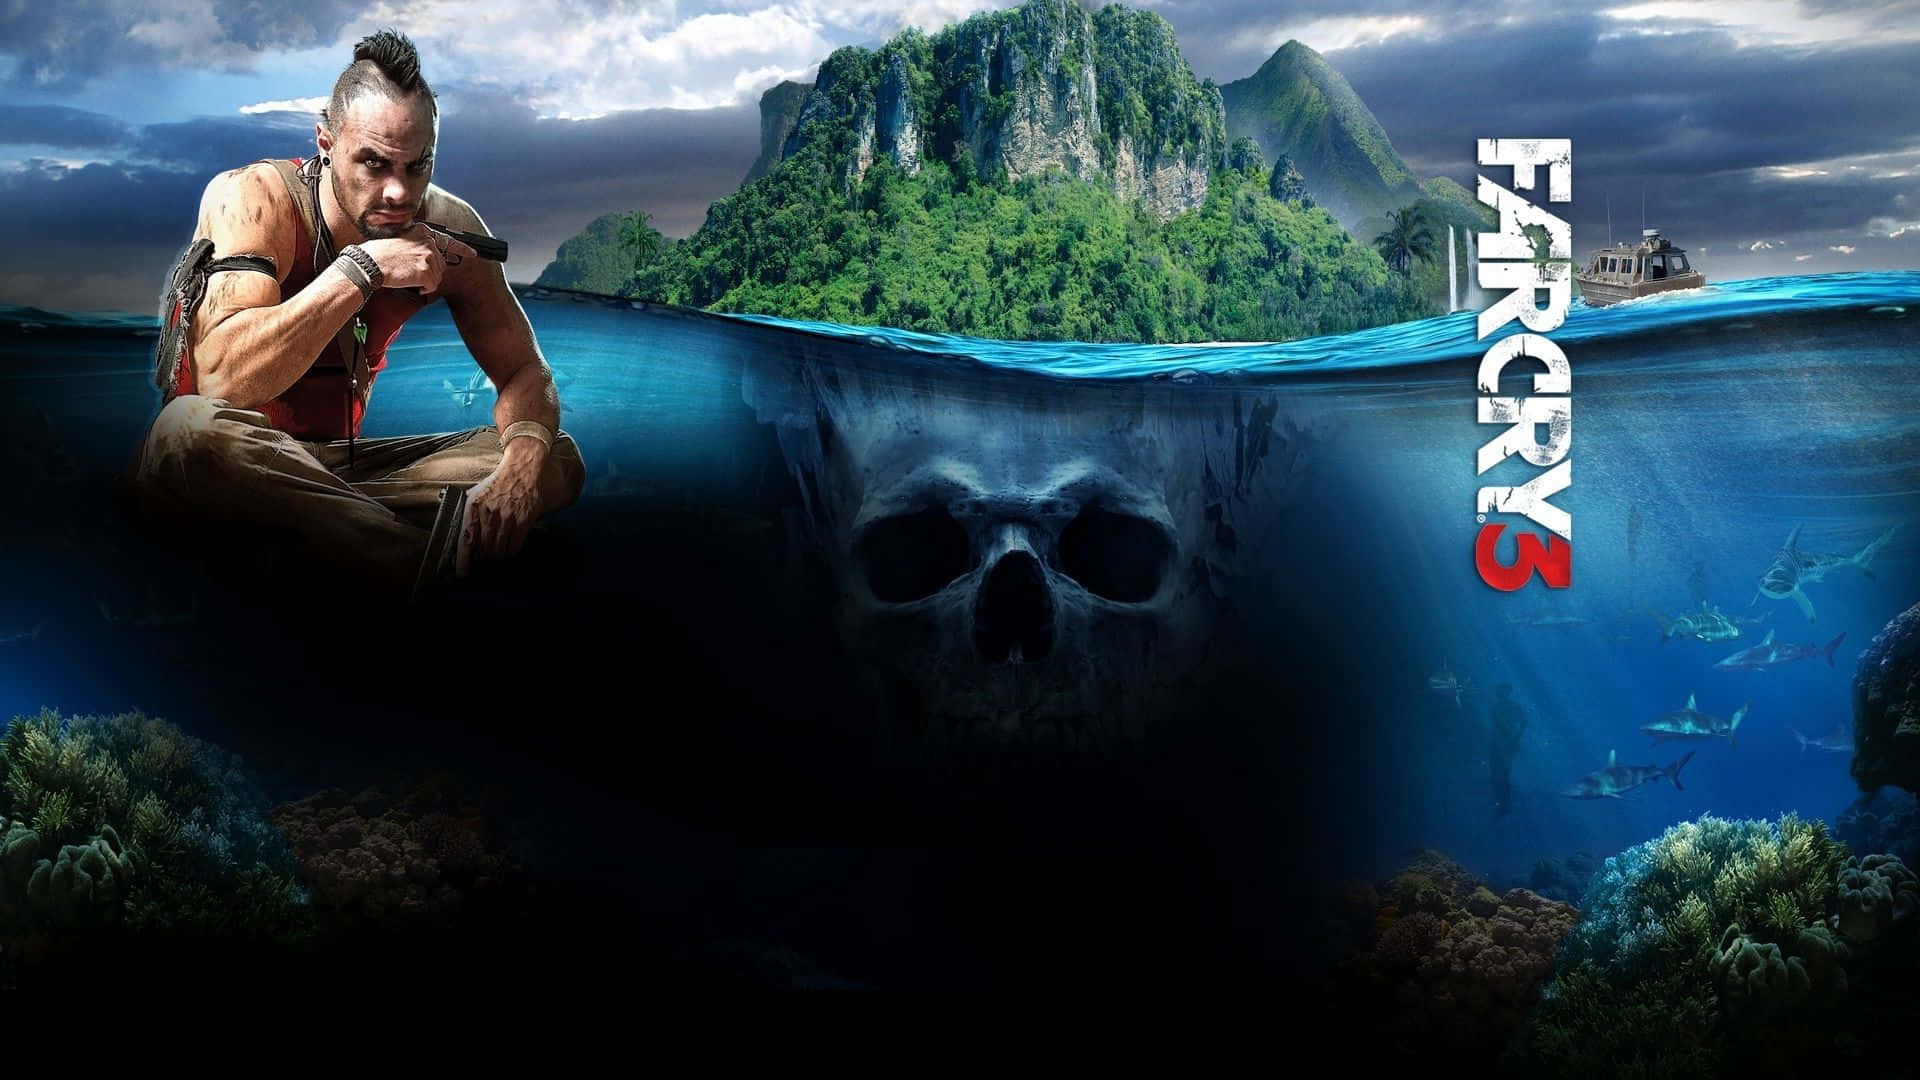 Explore the Island of Far Cry 3 Wallpaper